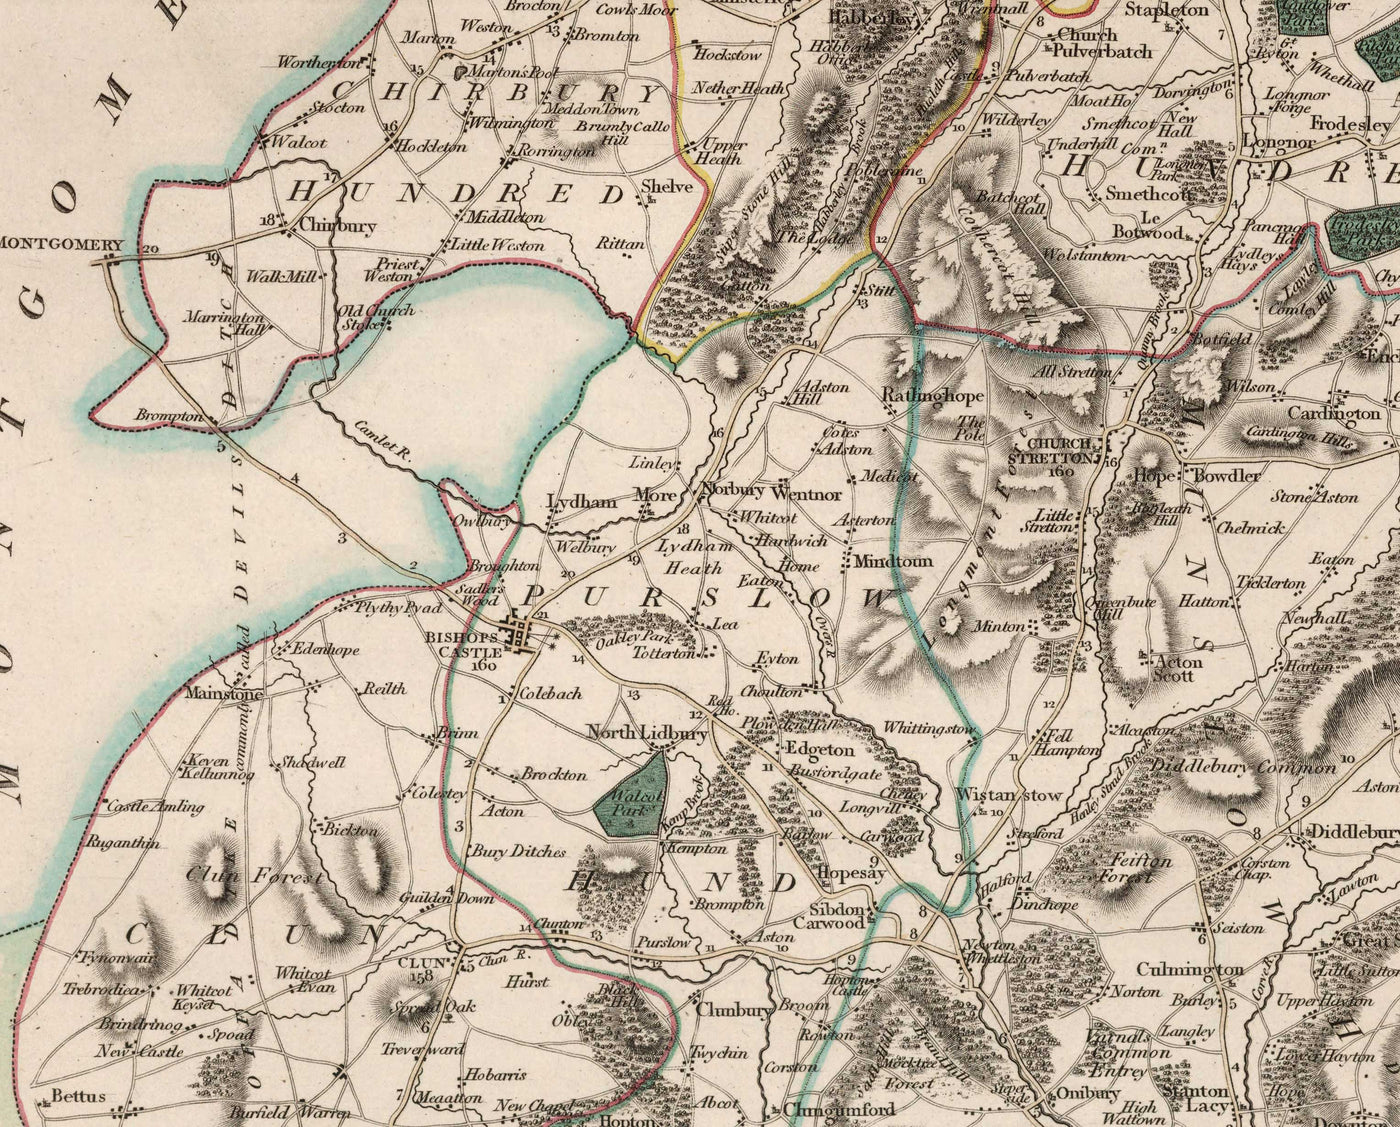 Old Map of Shropshire in 1805 by John Cary - Shrewsbury, Bridgnorth, Ludlow, Ironbridge, Oswestry